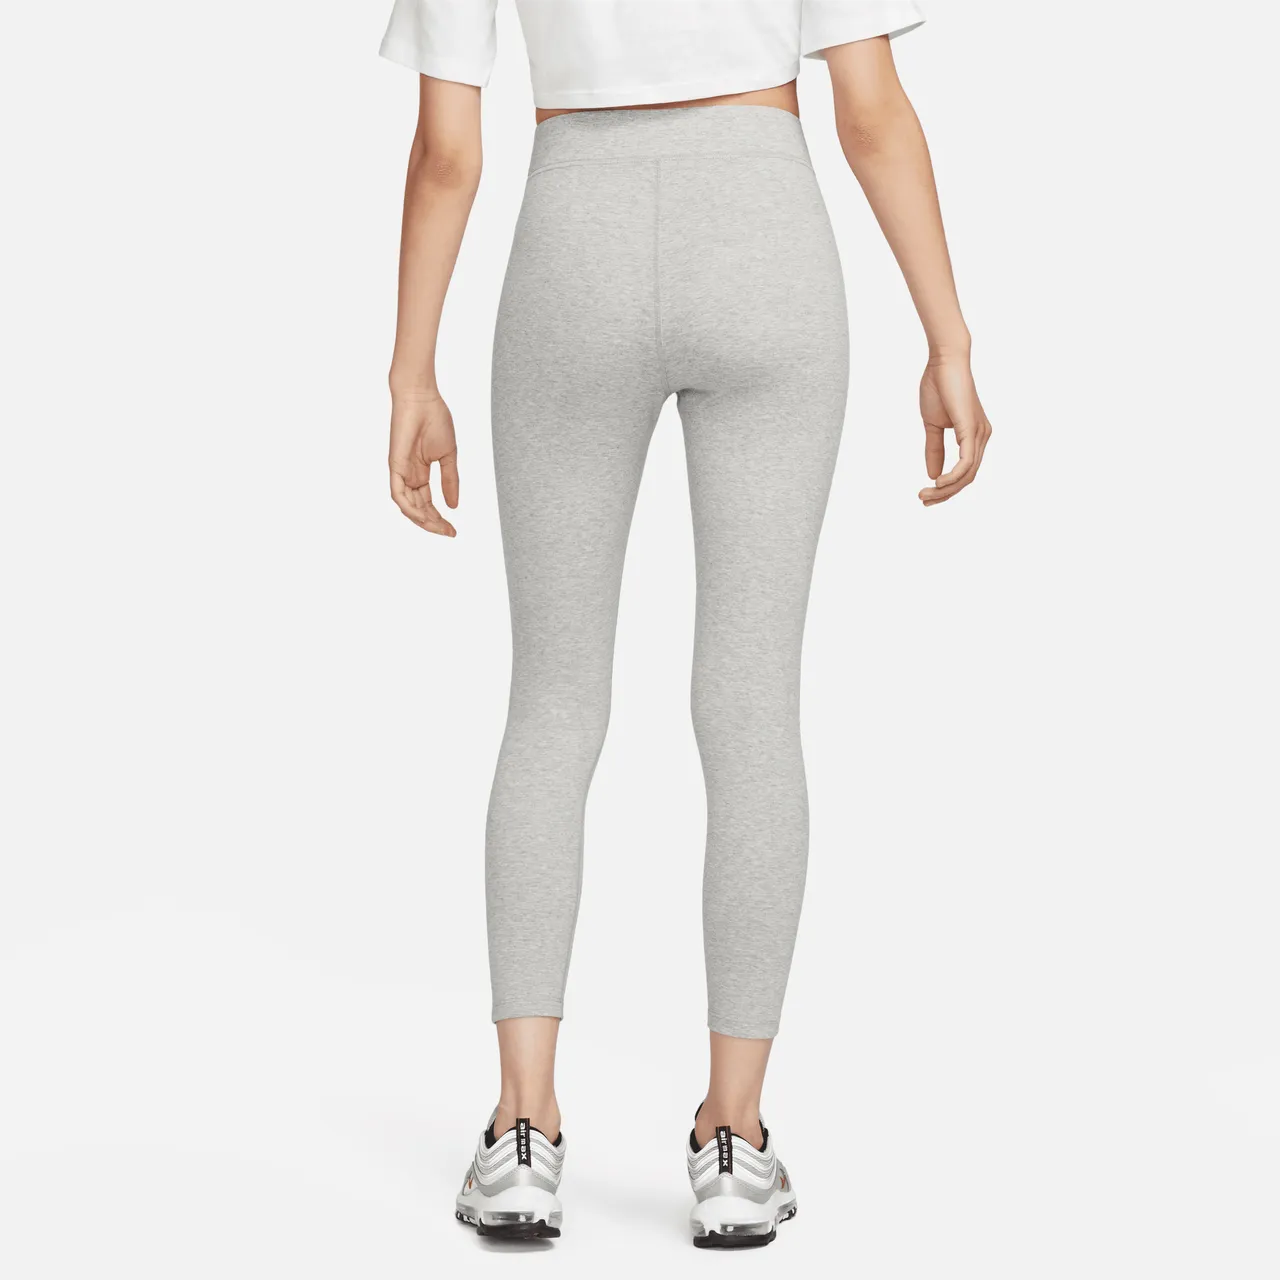 Nike Sportswear Classic 7/8-legging met hoge taille voor dames - Grijs